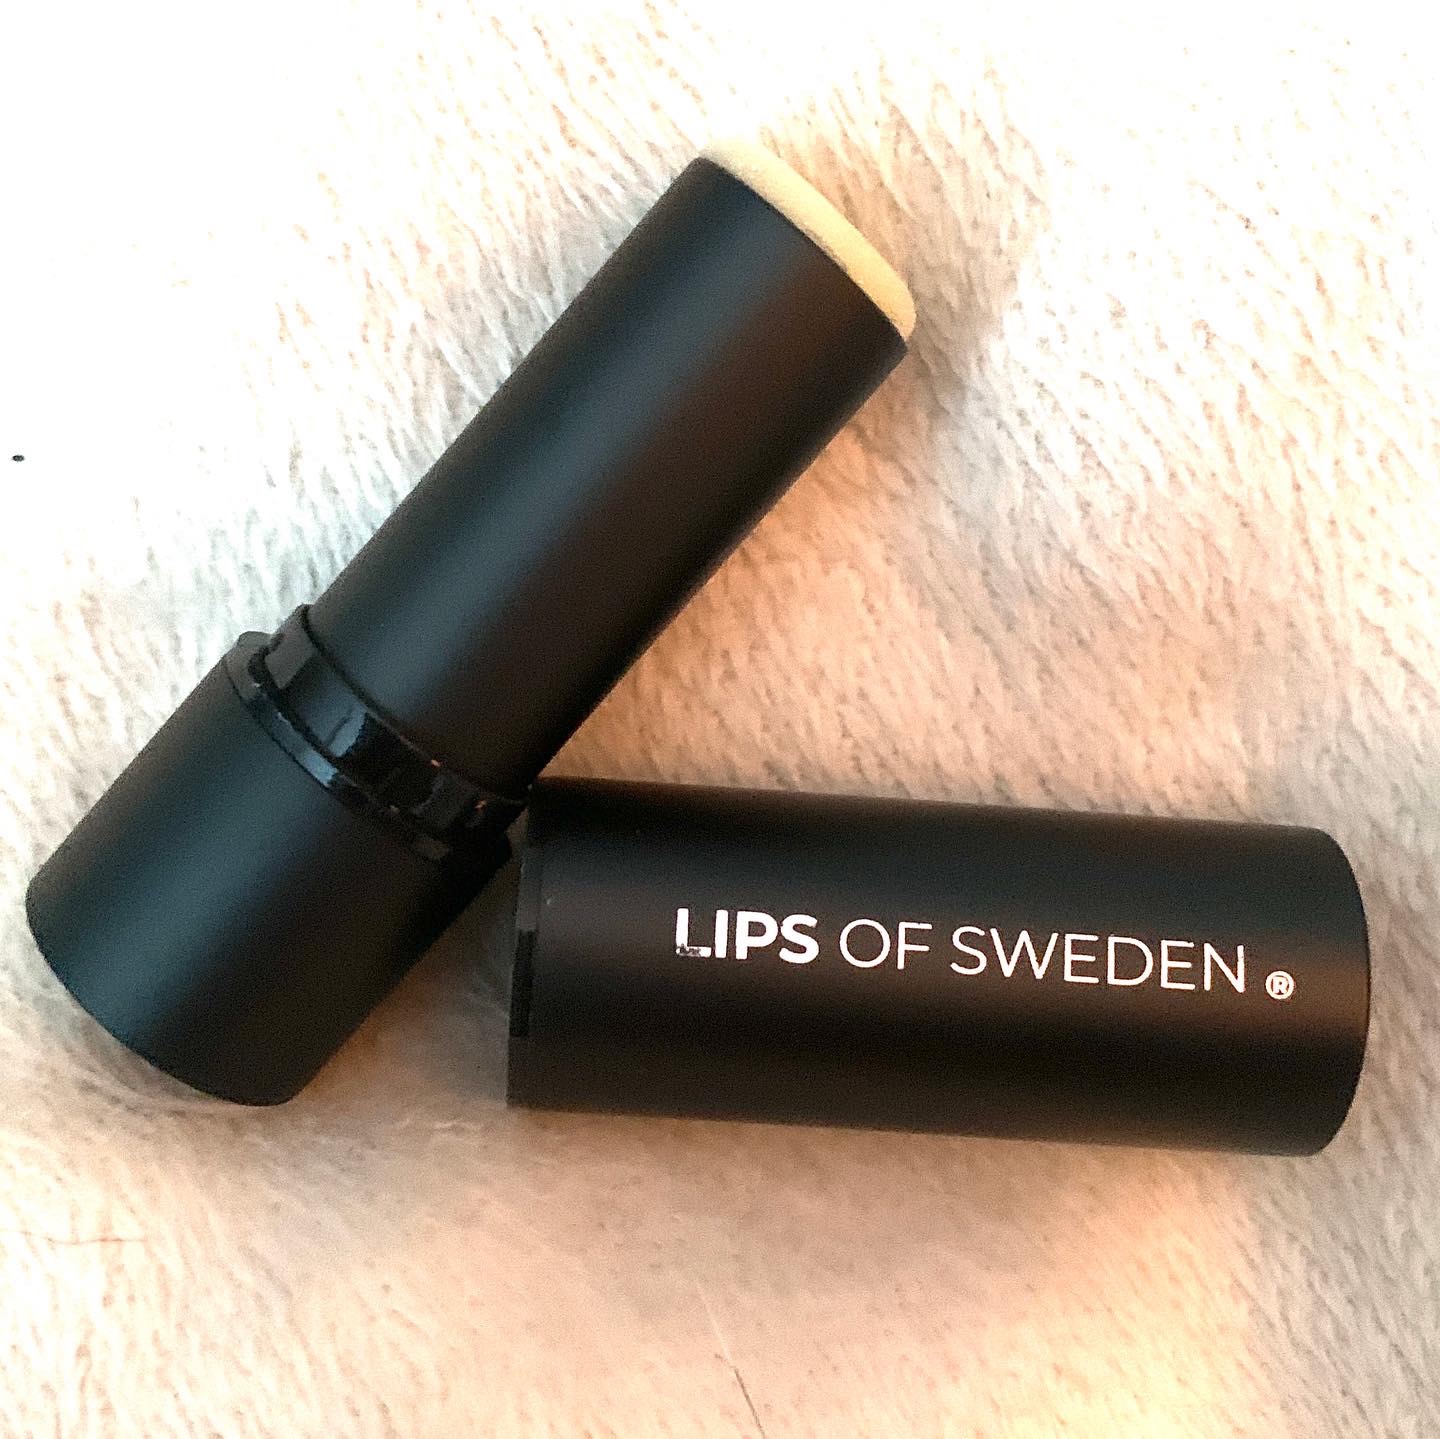 Lips of Sweden lipbalm